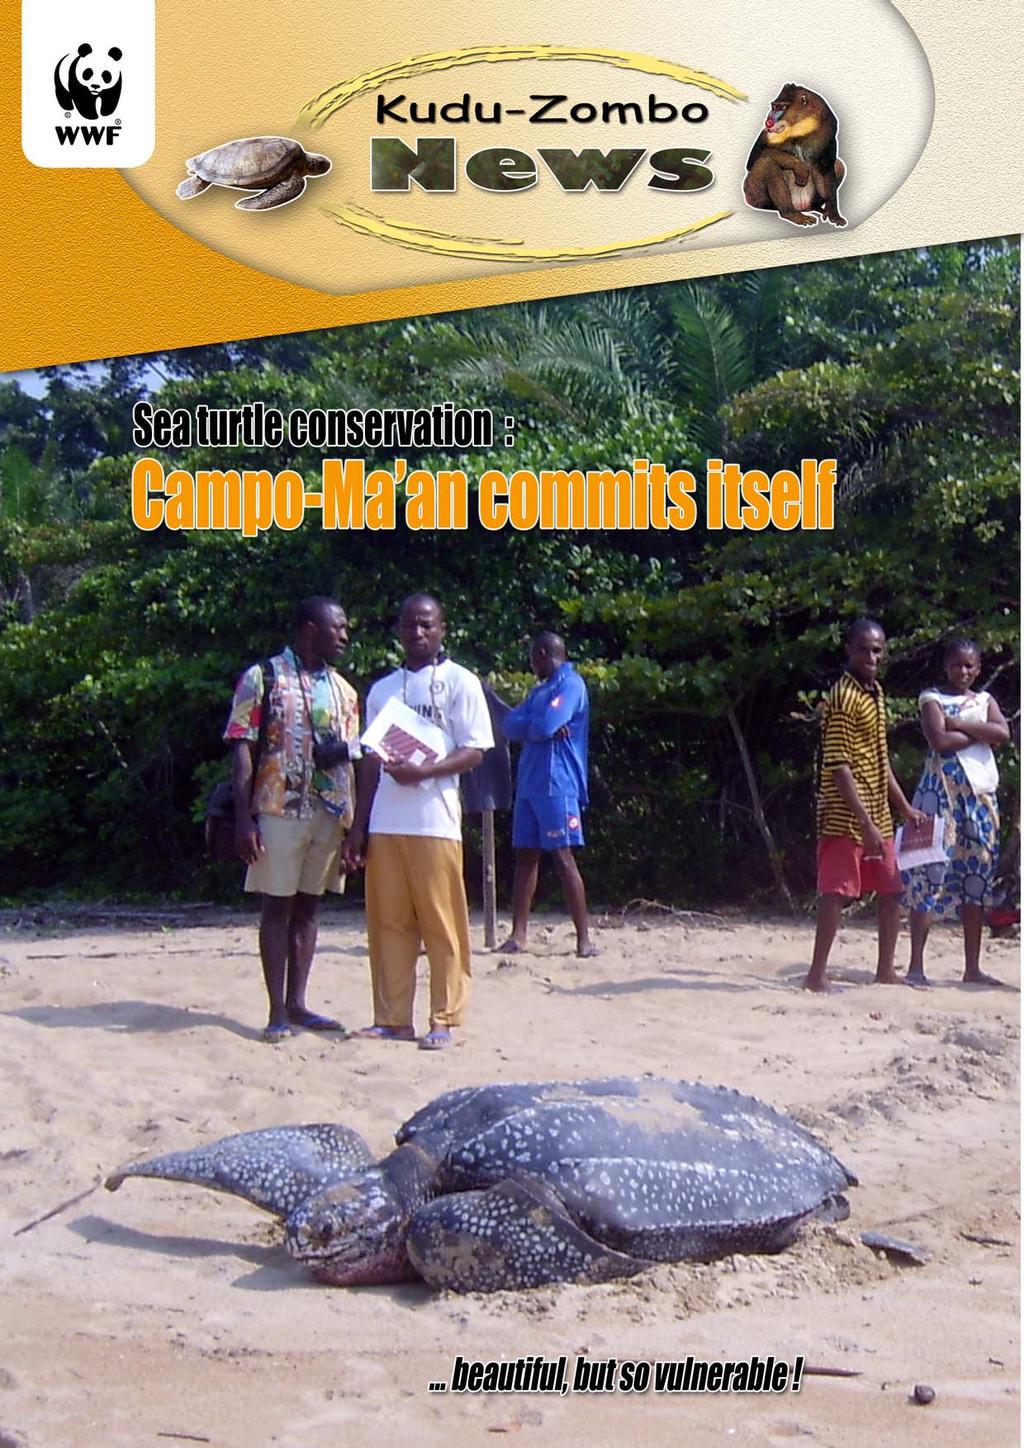 A publication of WWF